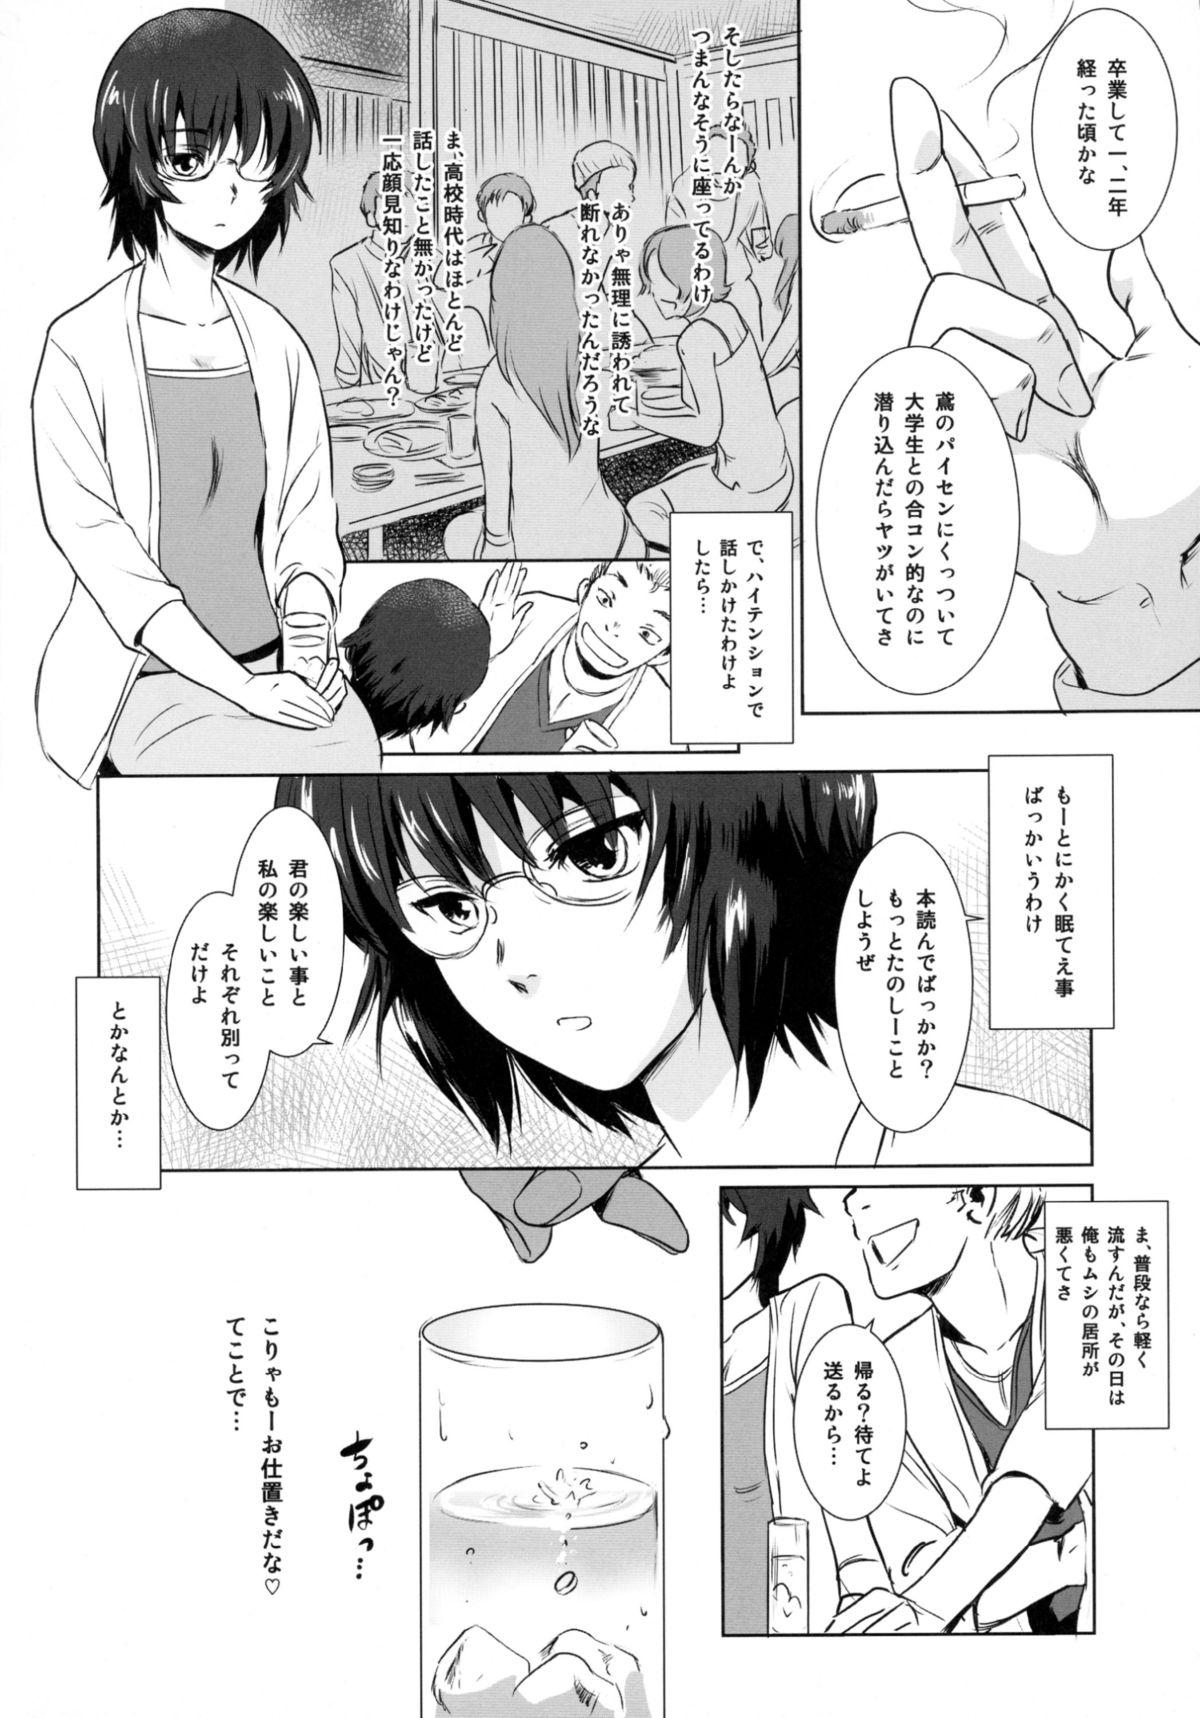 Story of the 'N' Situation - Situation#3 Mukashi no Otoko 19